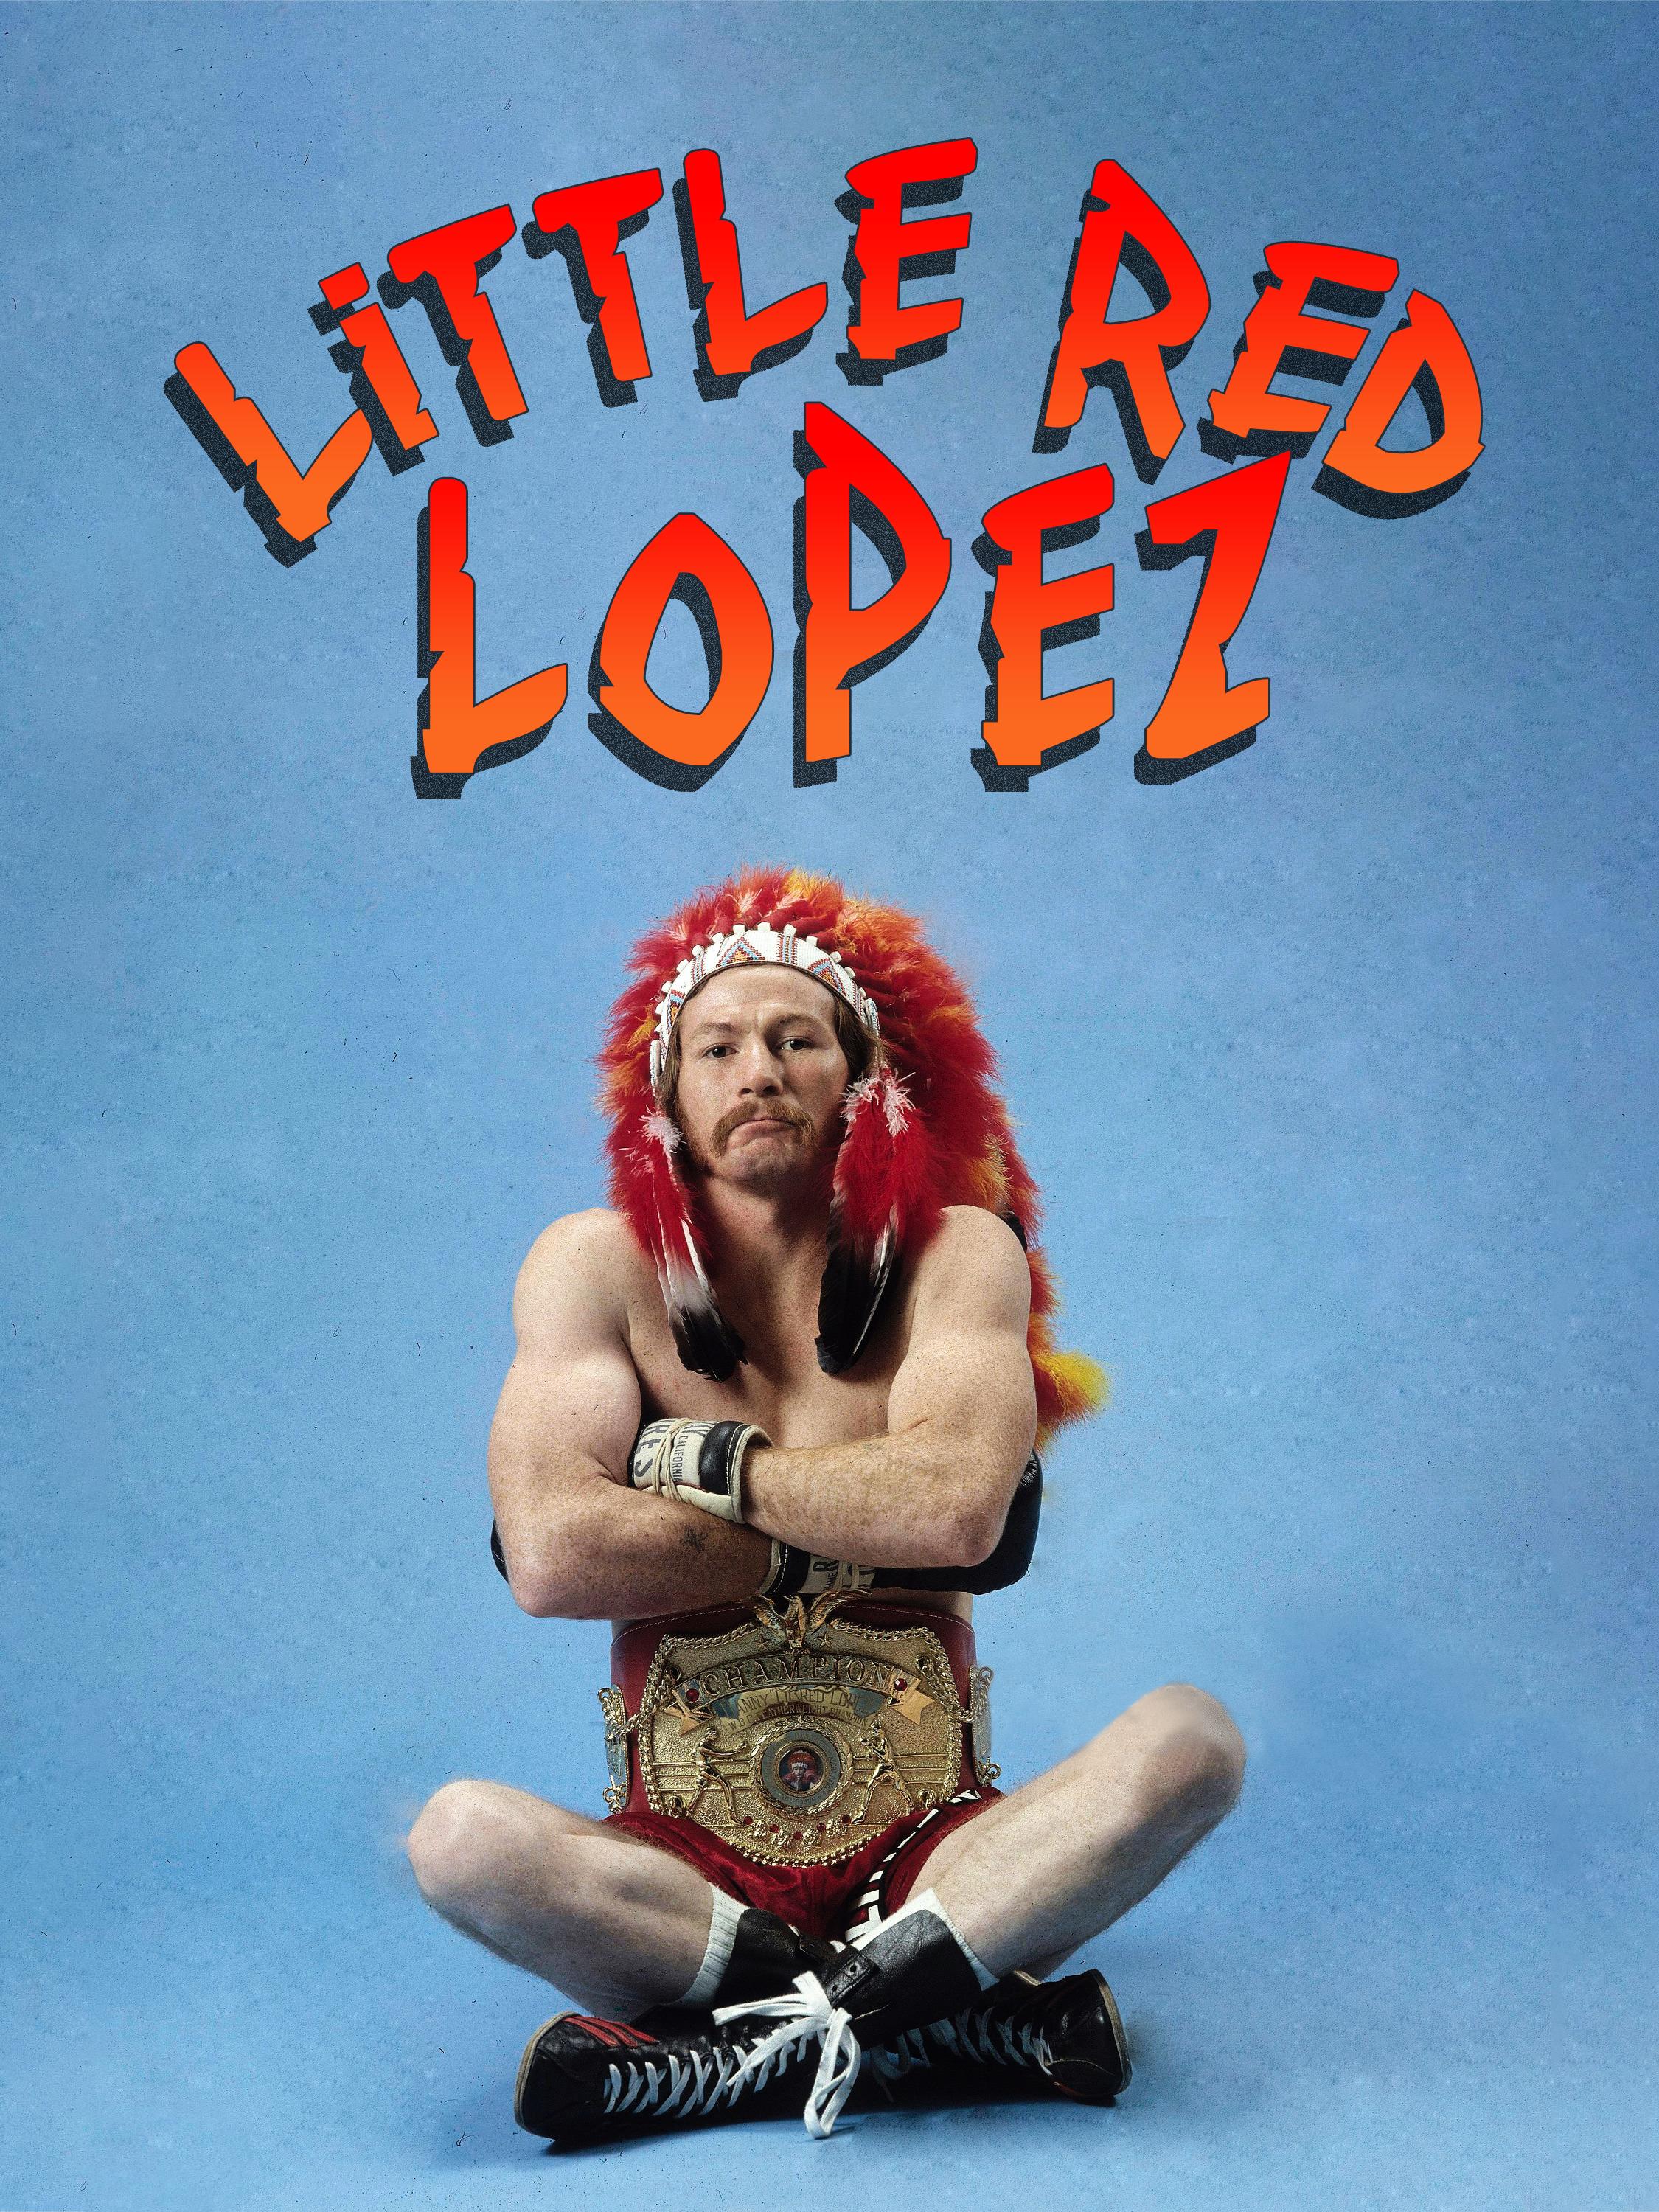 Little Red Lopez